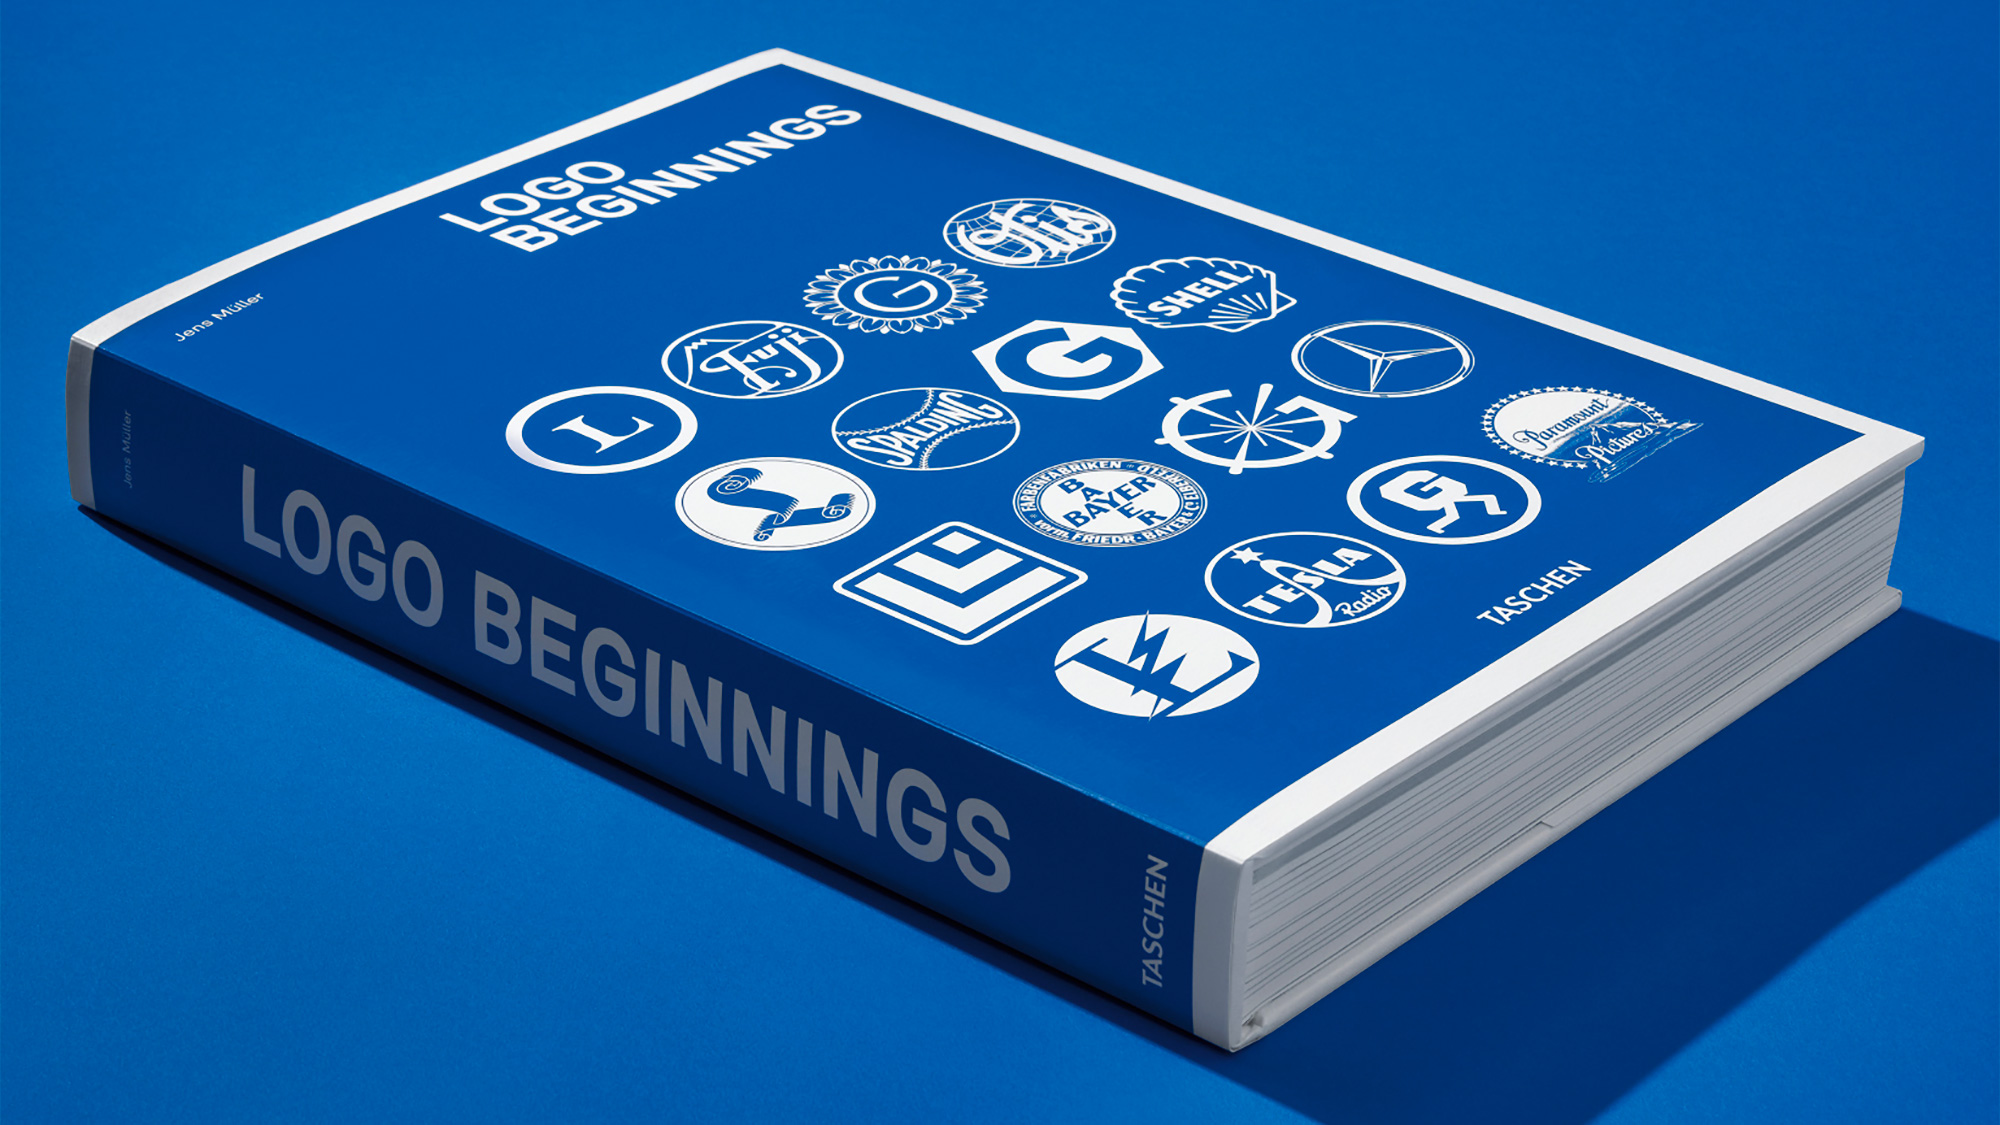 “Logo Beginnings” Book